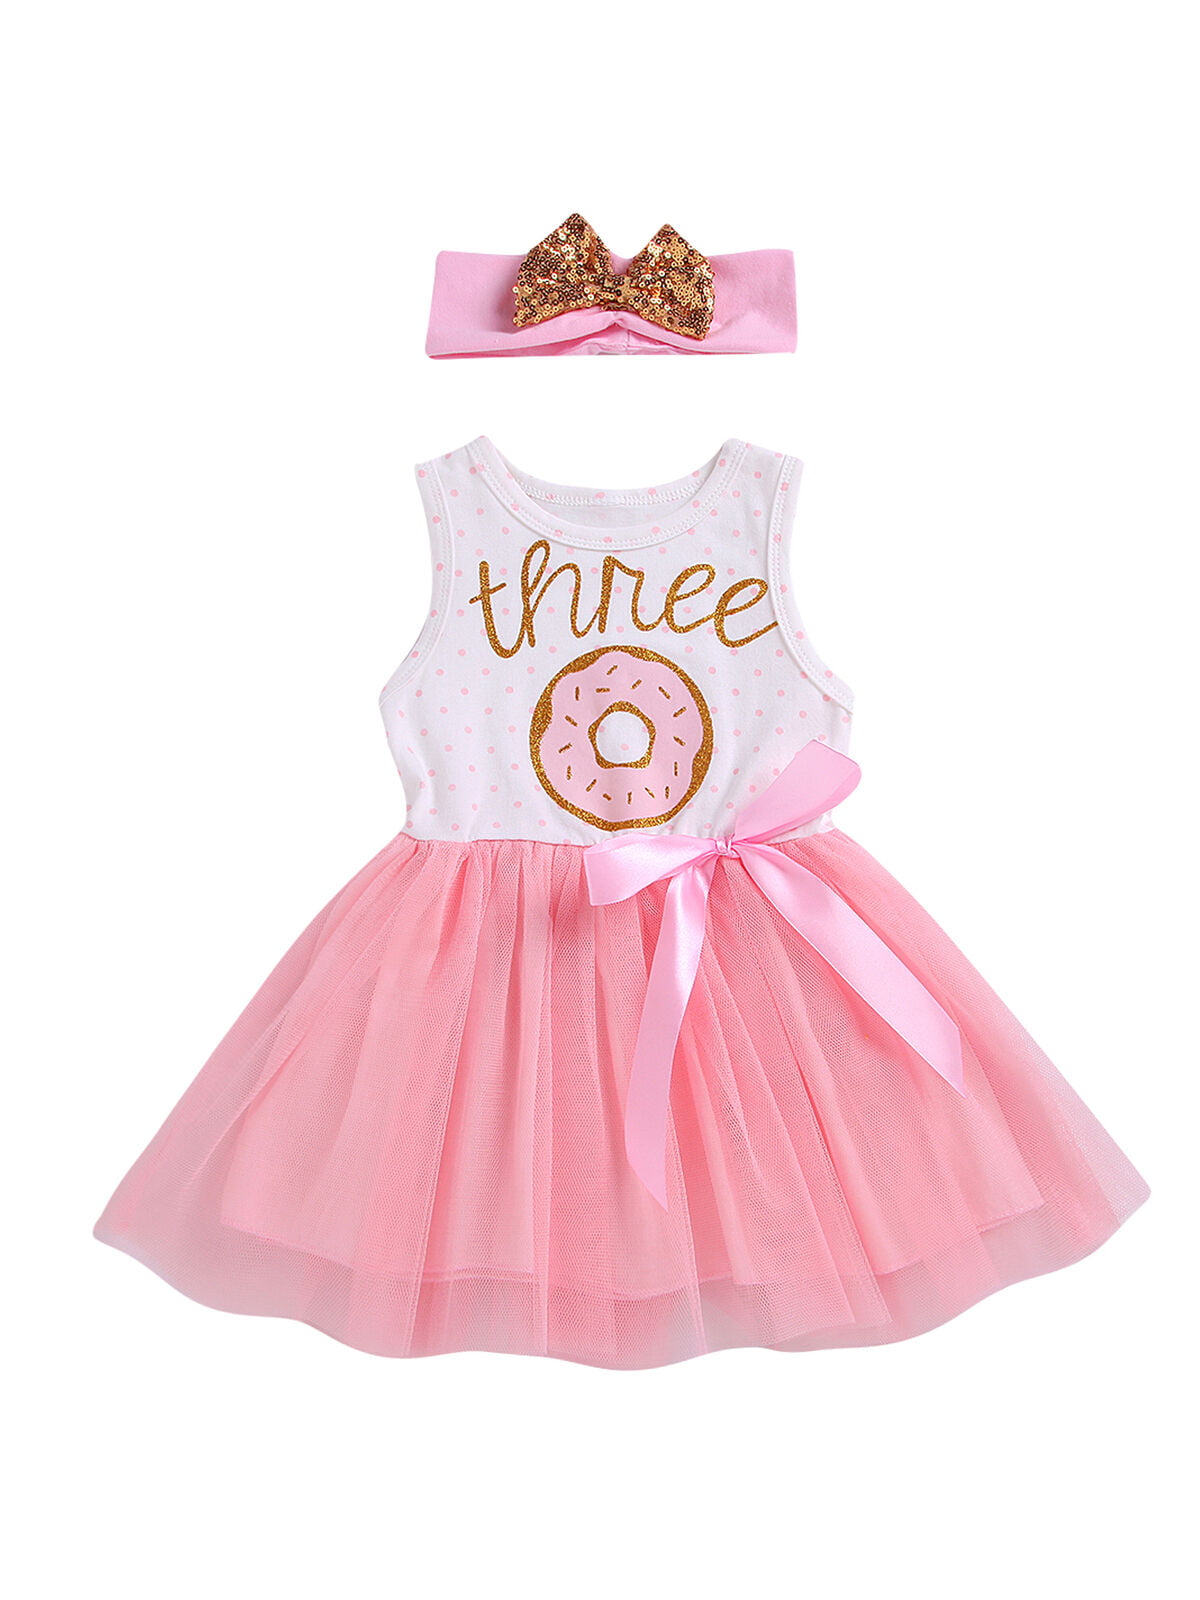 Crown Baby Girl 1st/2nd/3rd Birthday Party Dress Princess Cake Smash Tutu Skirt 